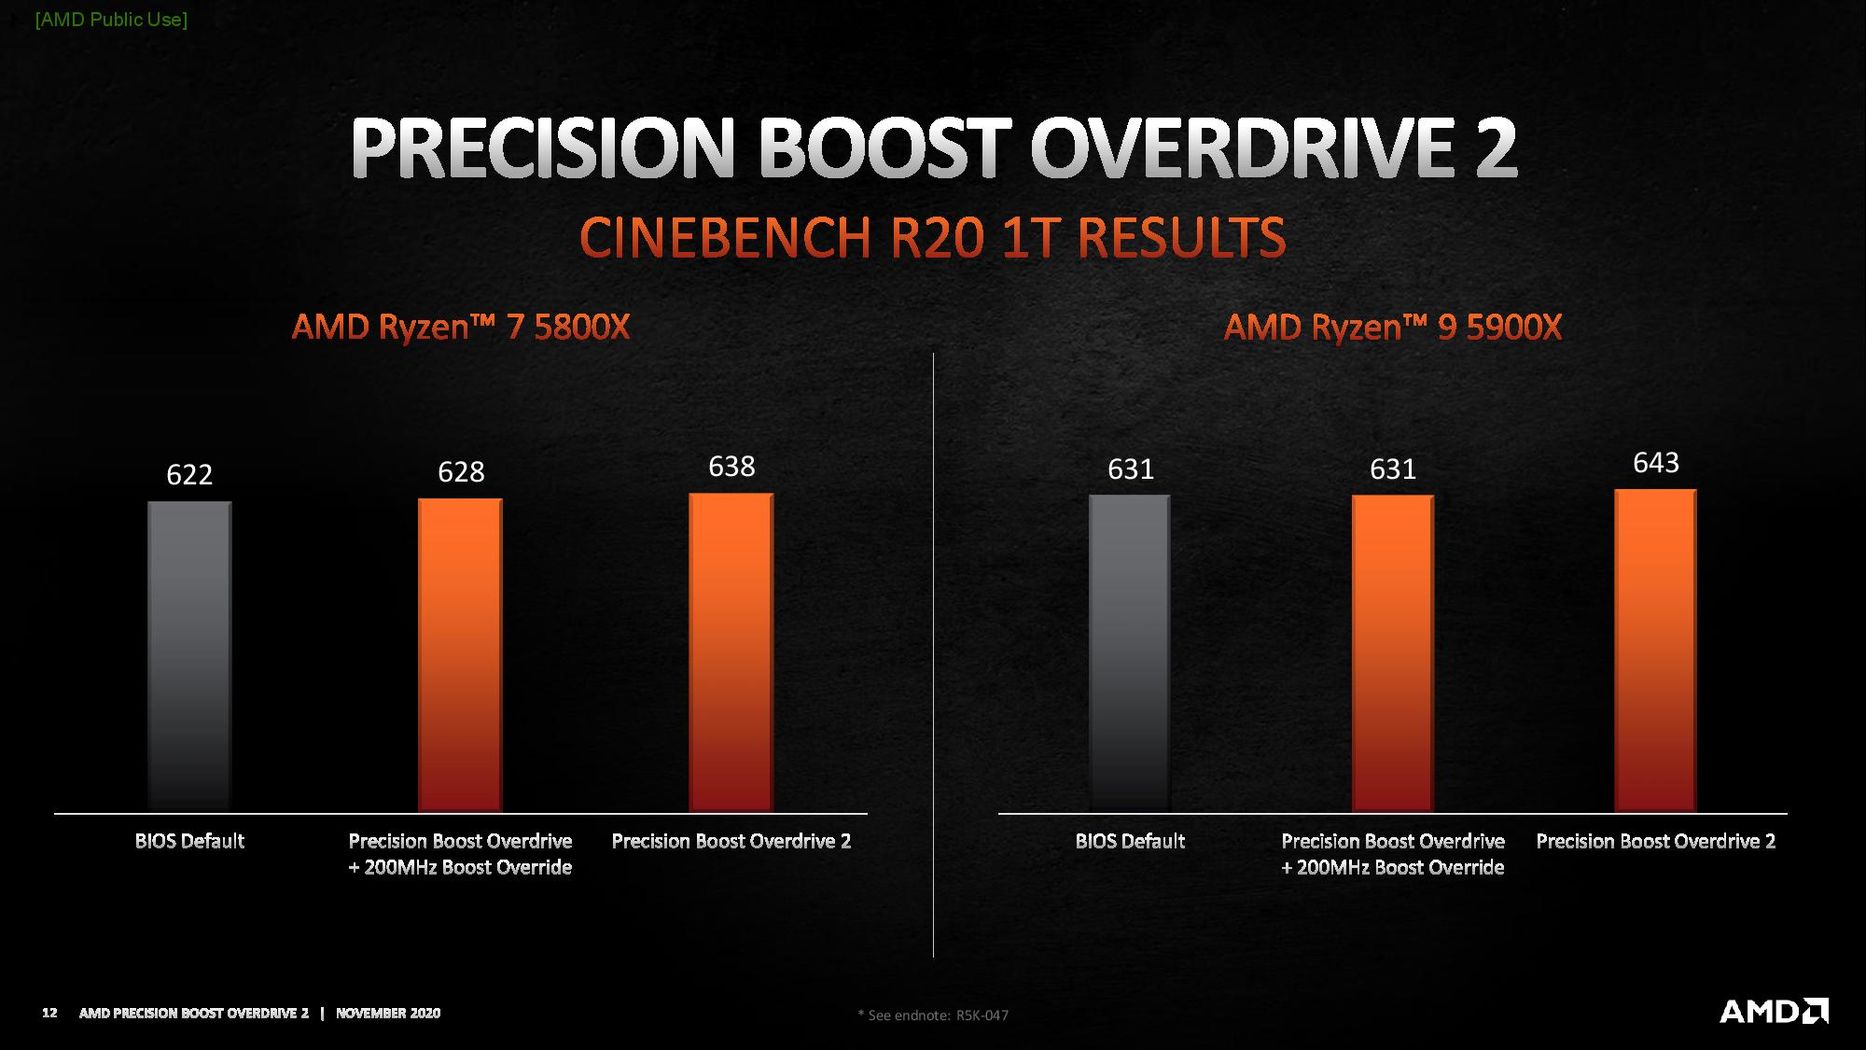 amd ryzen 5000 series precision boost overdrive 2 page 012 videocardz AMD เปิดตัวฟีเจอร์ Undervolting Action ใน Precision Boost Overdrive 2 พร้อมรองรับการทำงานในซีพียู AMD RYZEN 5000ซีรี่ย์ให้ทำงานได้เต็มประสิทธิภาพมากขึ้น 